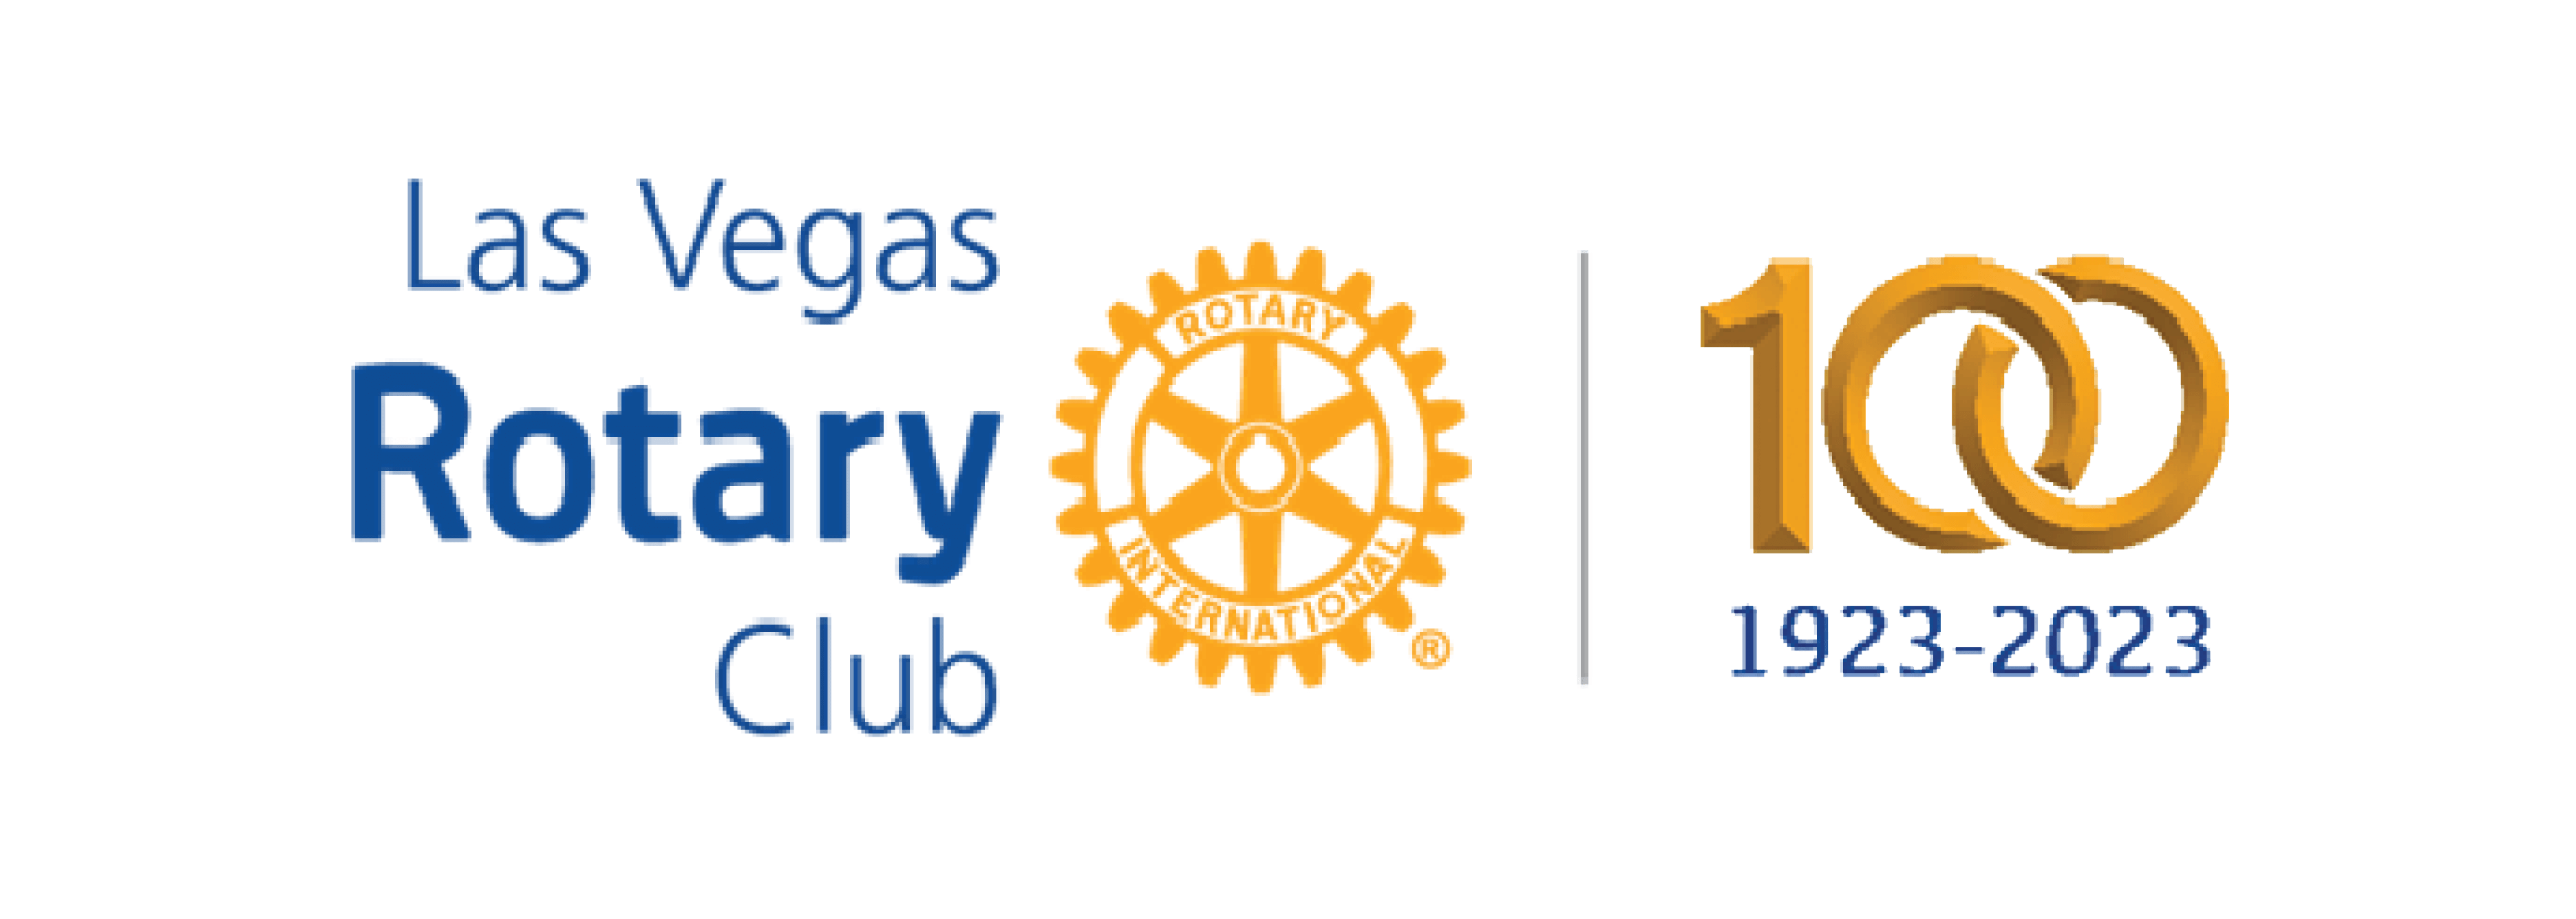 Las Vegas Rotary Club